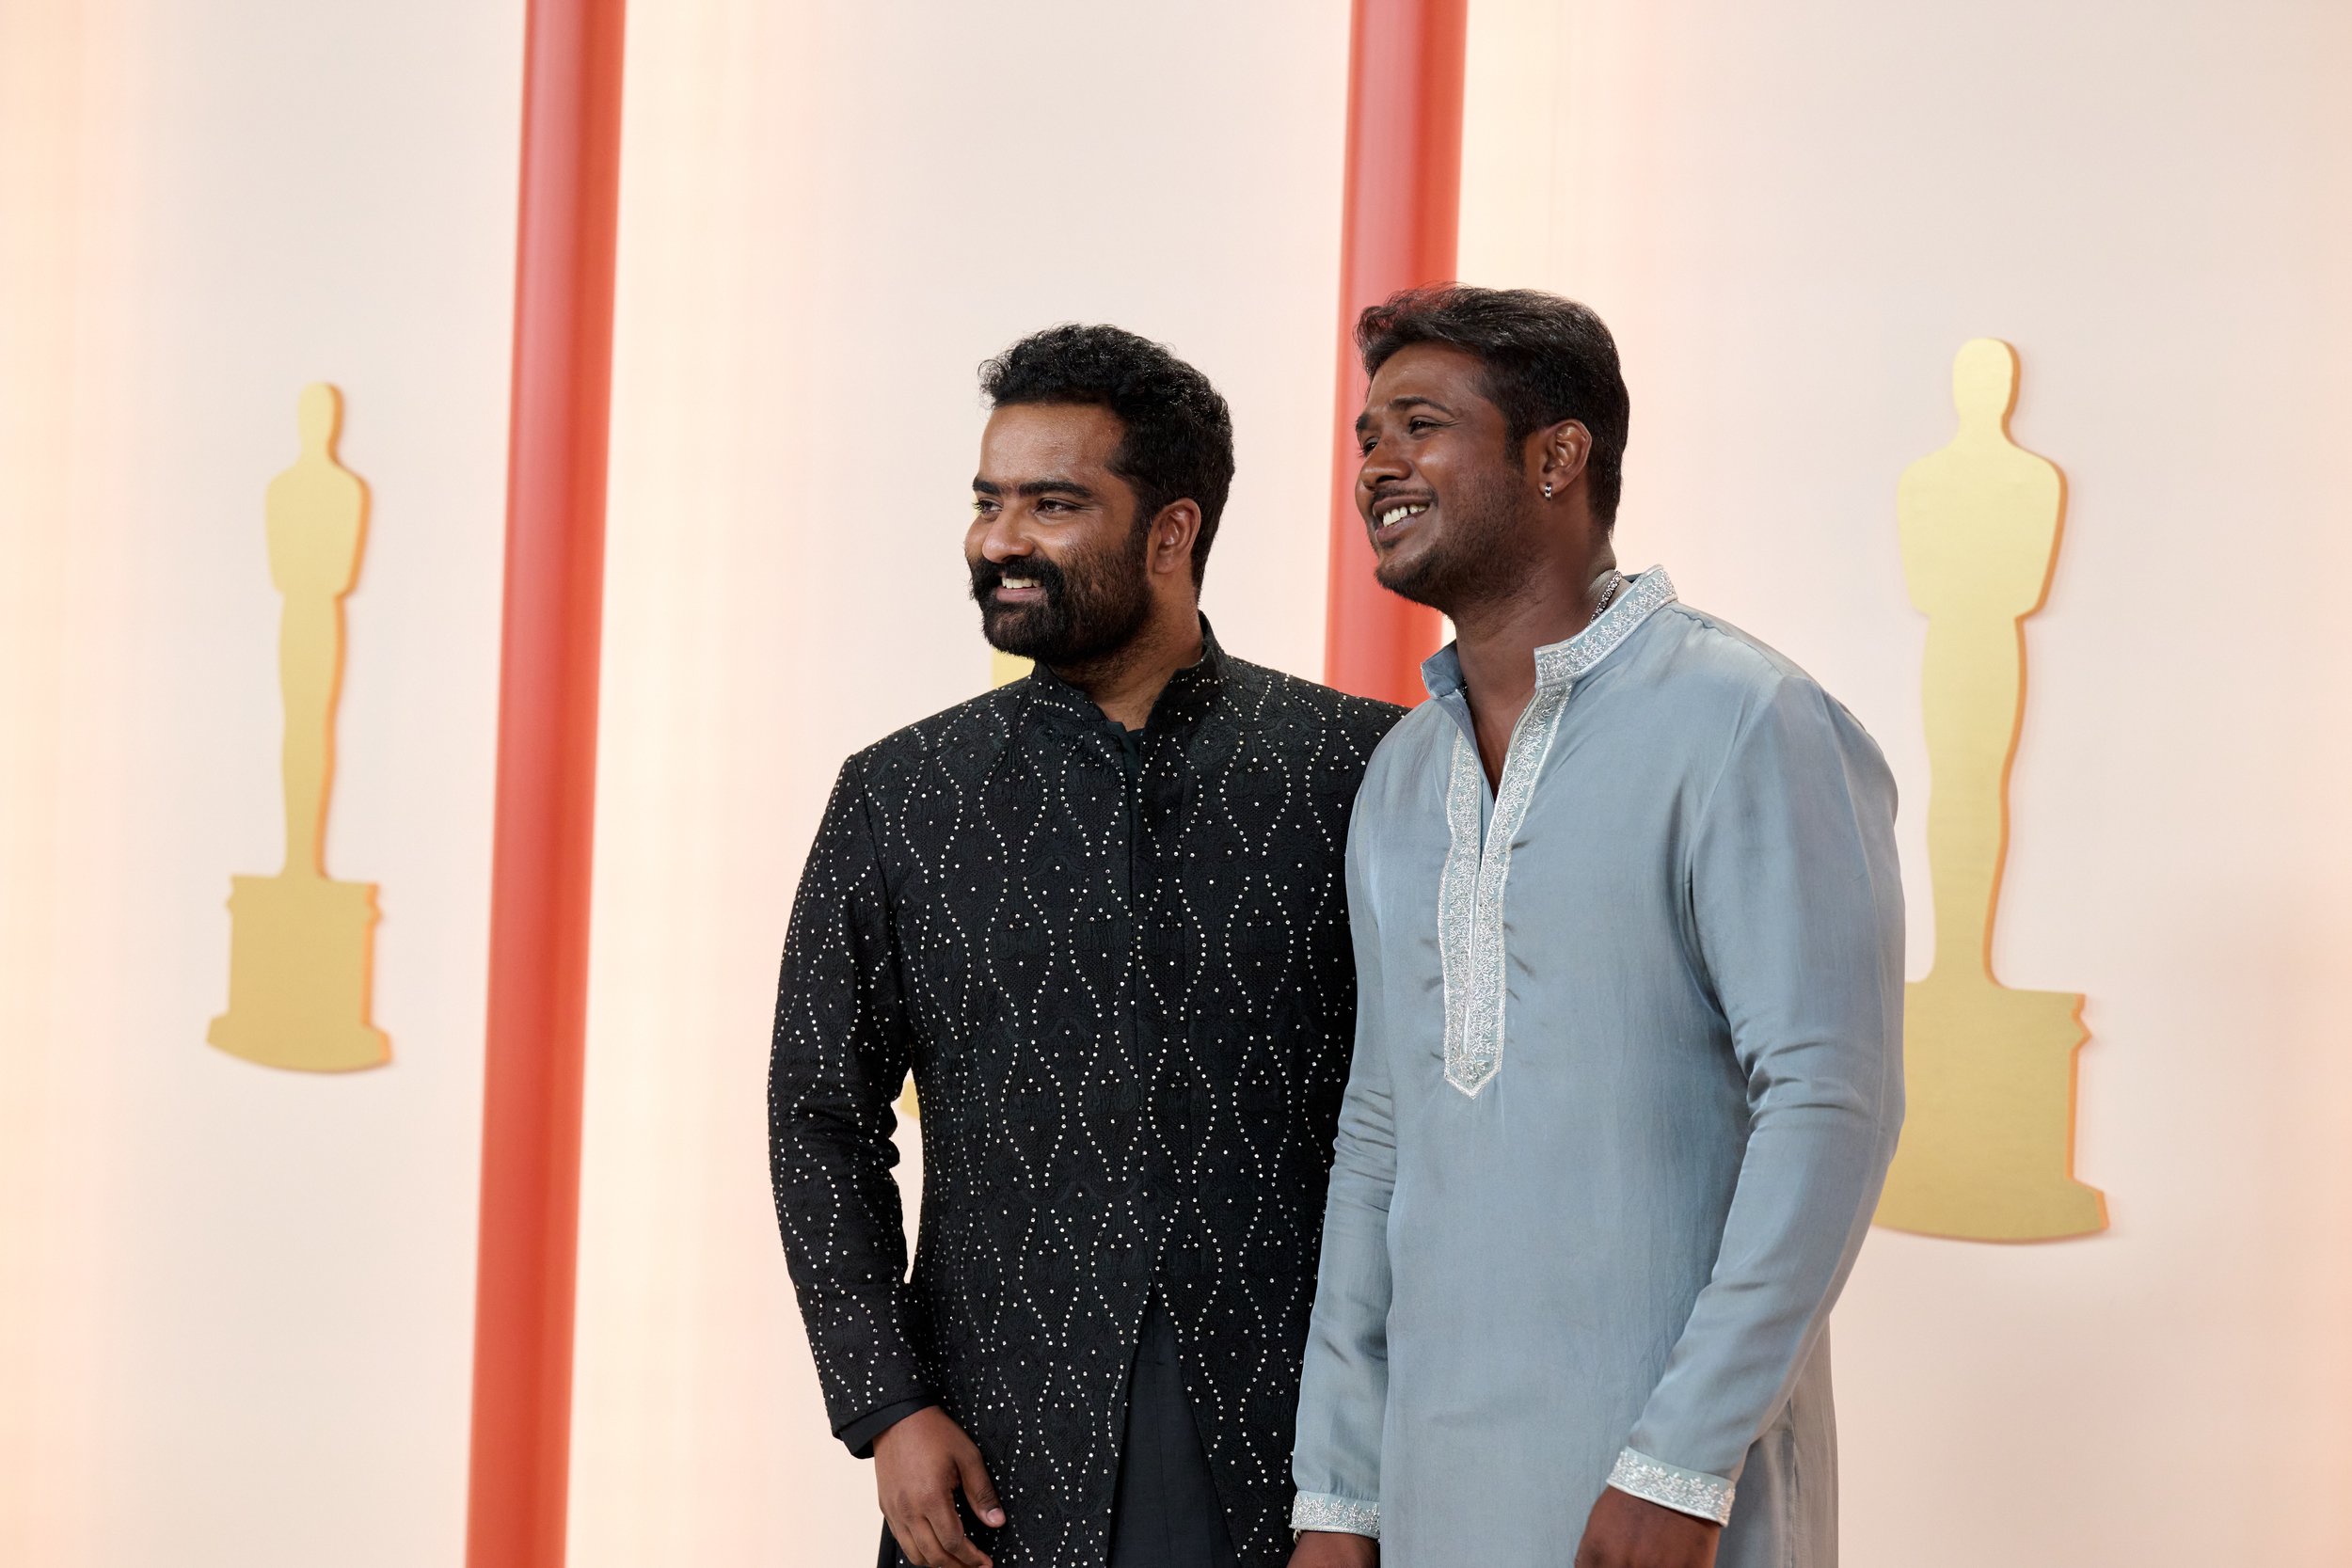 Kaala Bhairava and Rahul Sipligunj arrive on the red carpet of The 95th Oscars